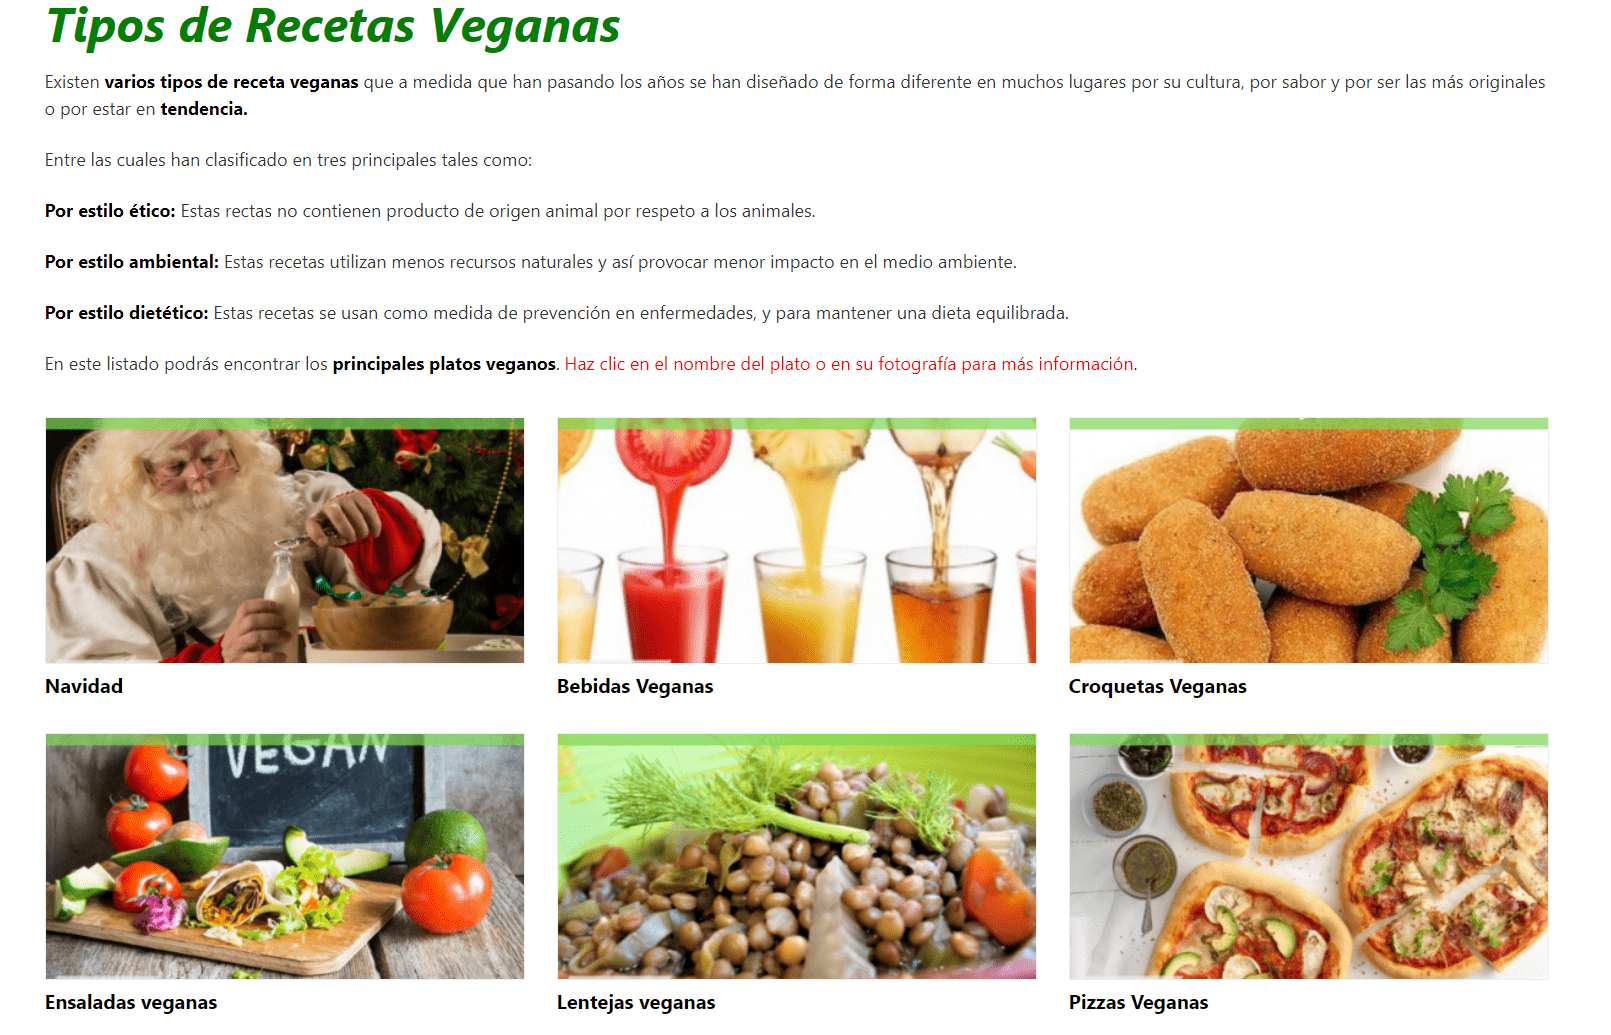 Recetas veganas